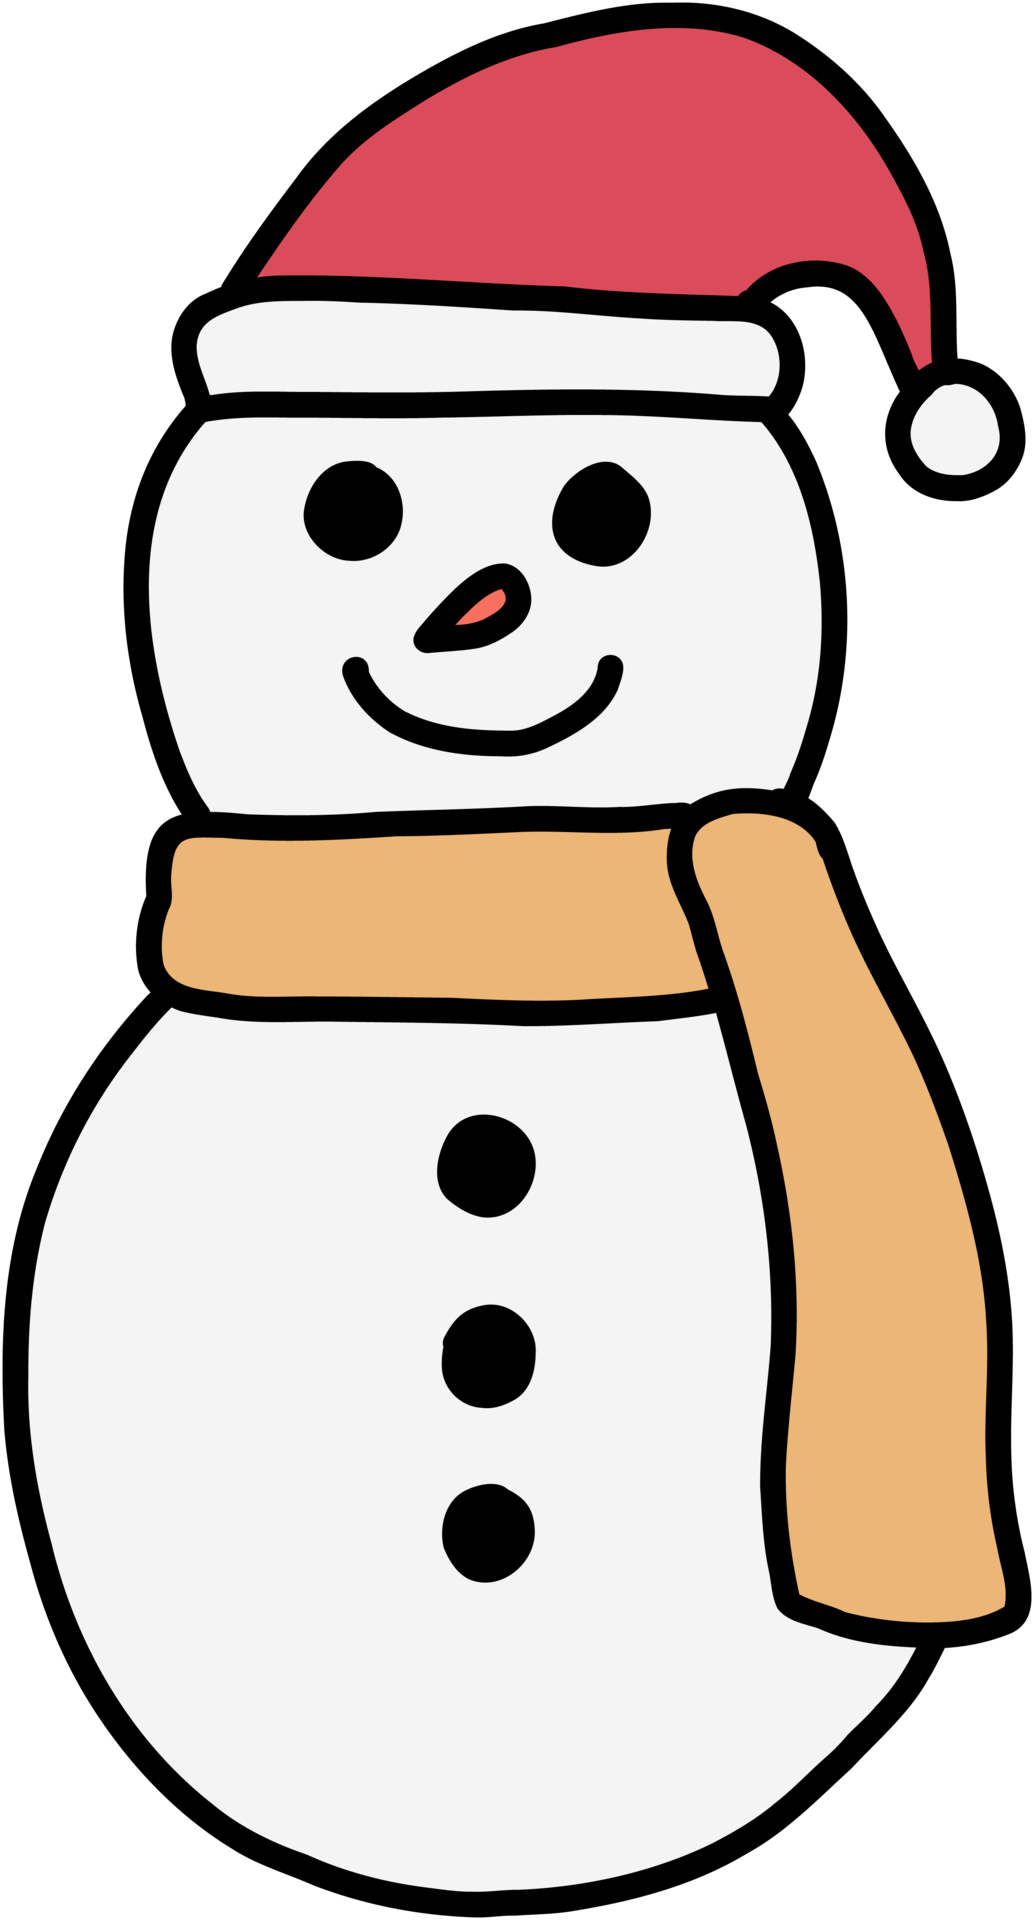 Premium Vector  Hand drawn snowman